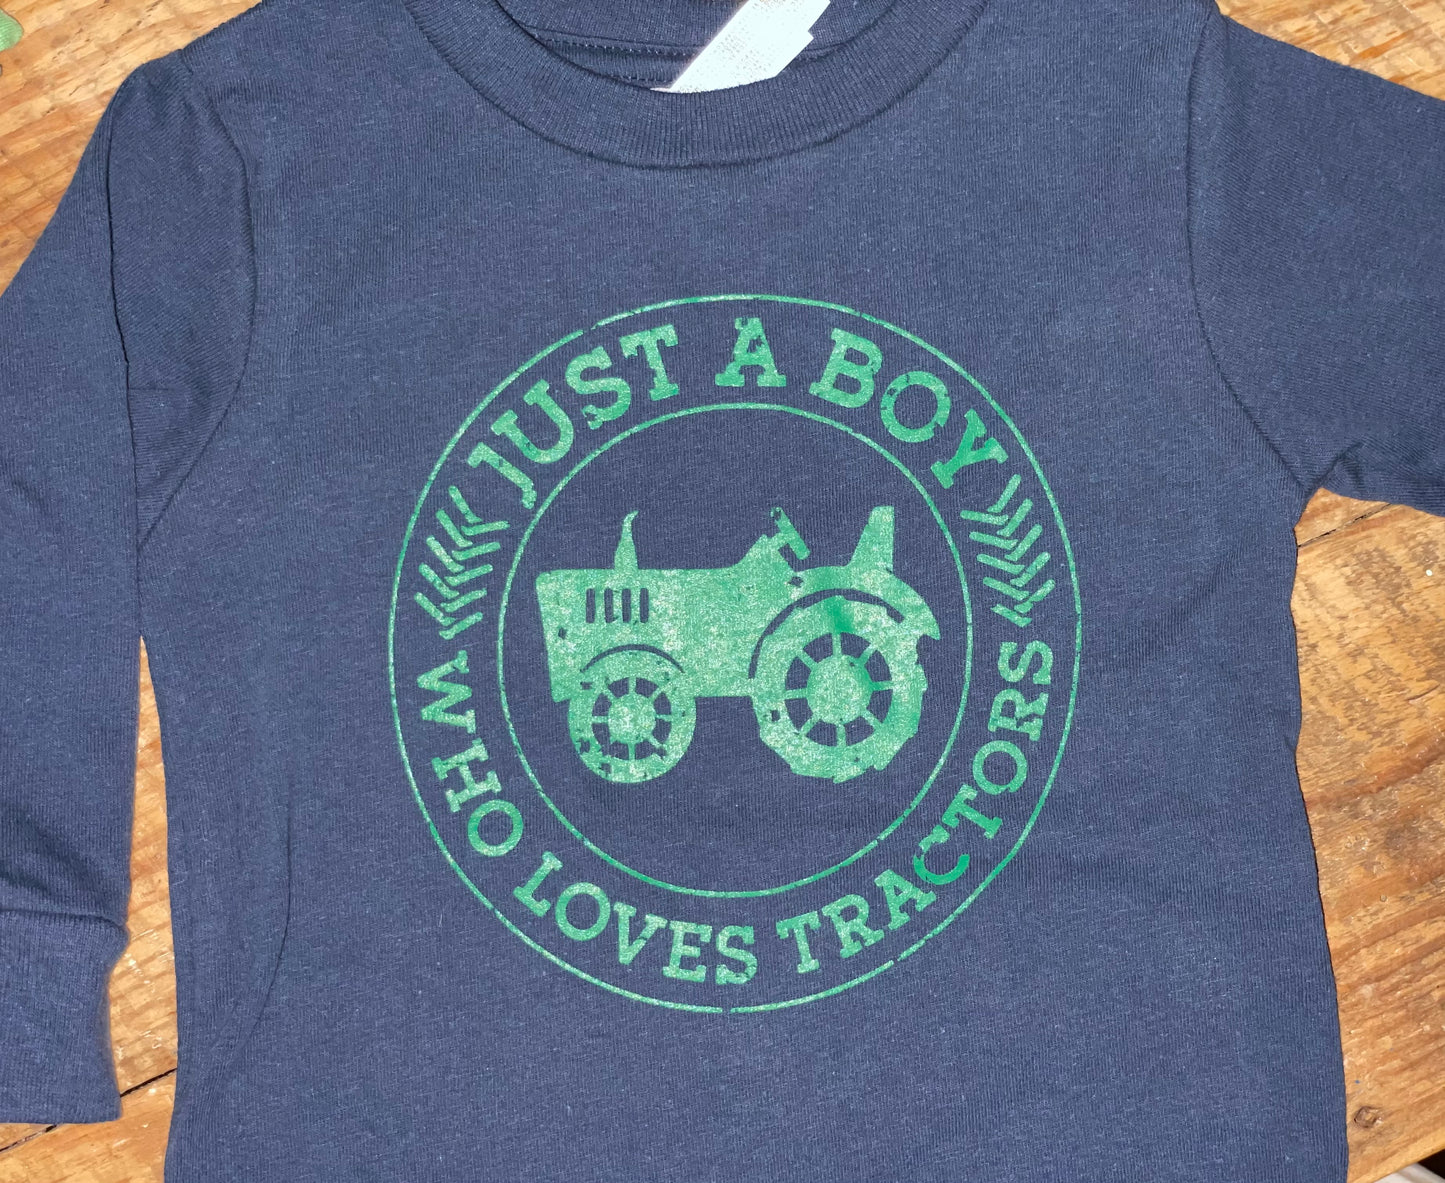 just a boy who loves tractors farm boy tee shirt navy oh boy tees long sleeve tee shirt